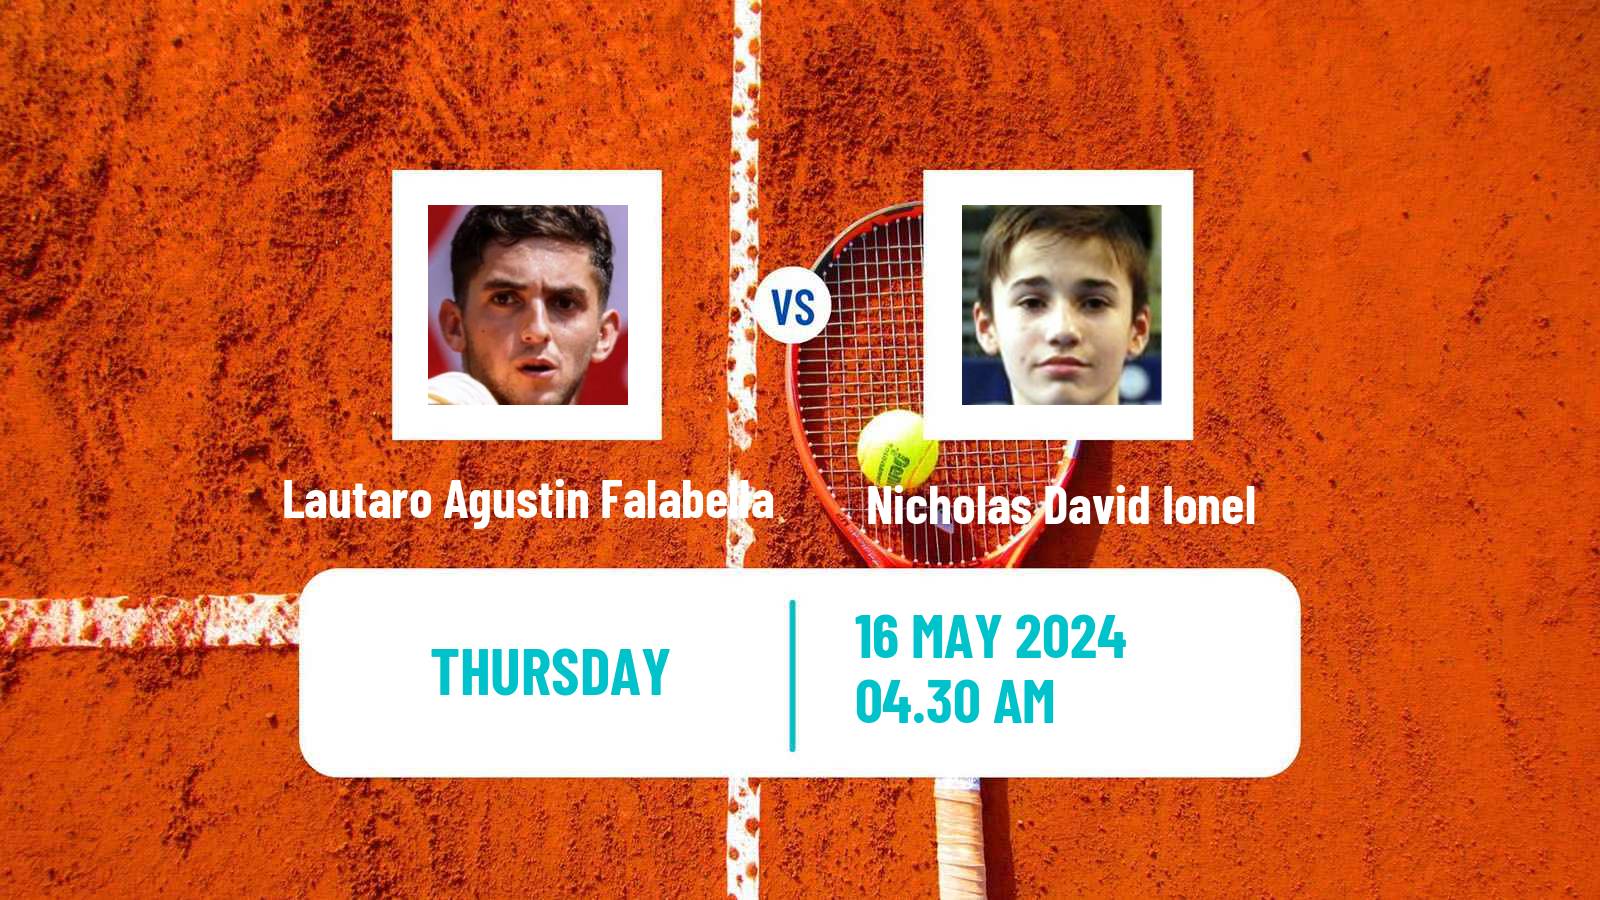 Tennis ITF M15 Bucharest 2 Men Lautaro Agustin Falabella - Nicholas David Ionel